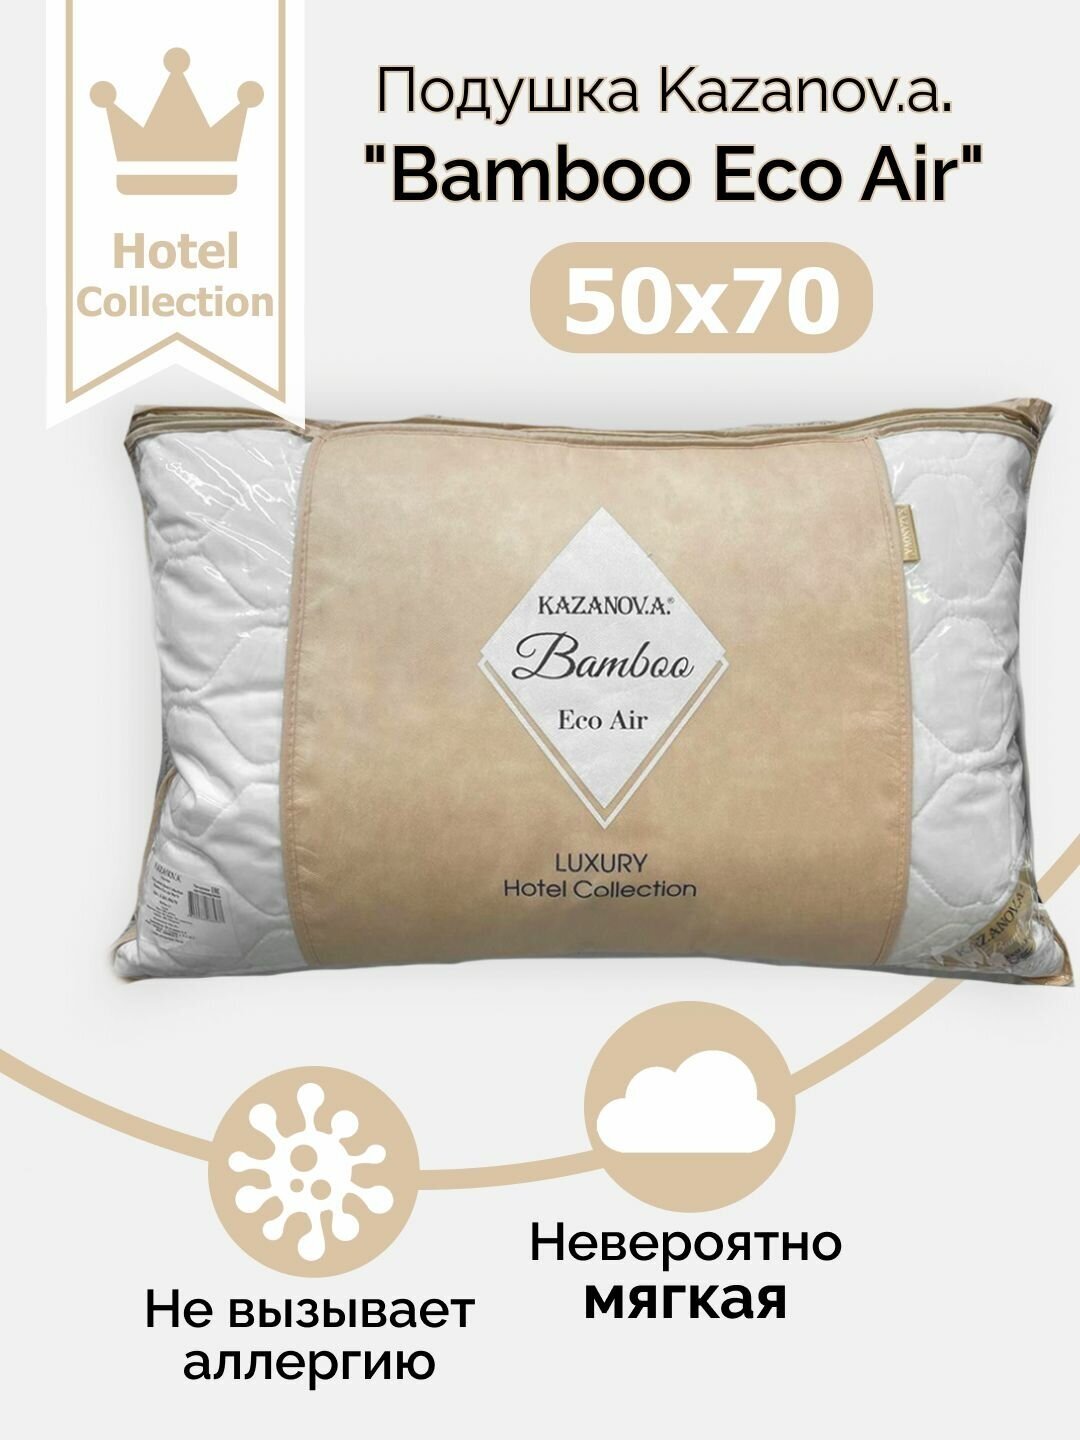 Подушка KAZANOV.A Luxury Hotel Collection "Bamboo Eco Air", 50х70 - фотография № 1